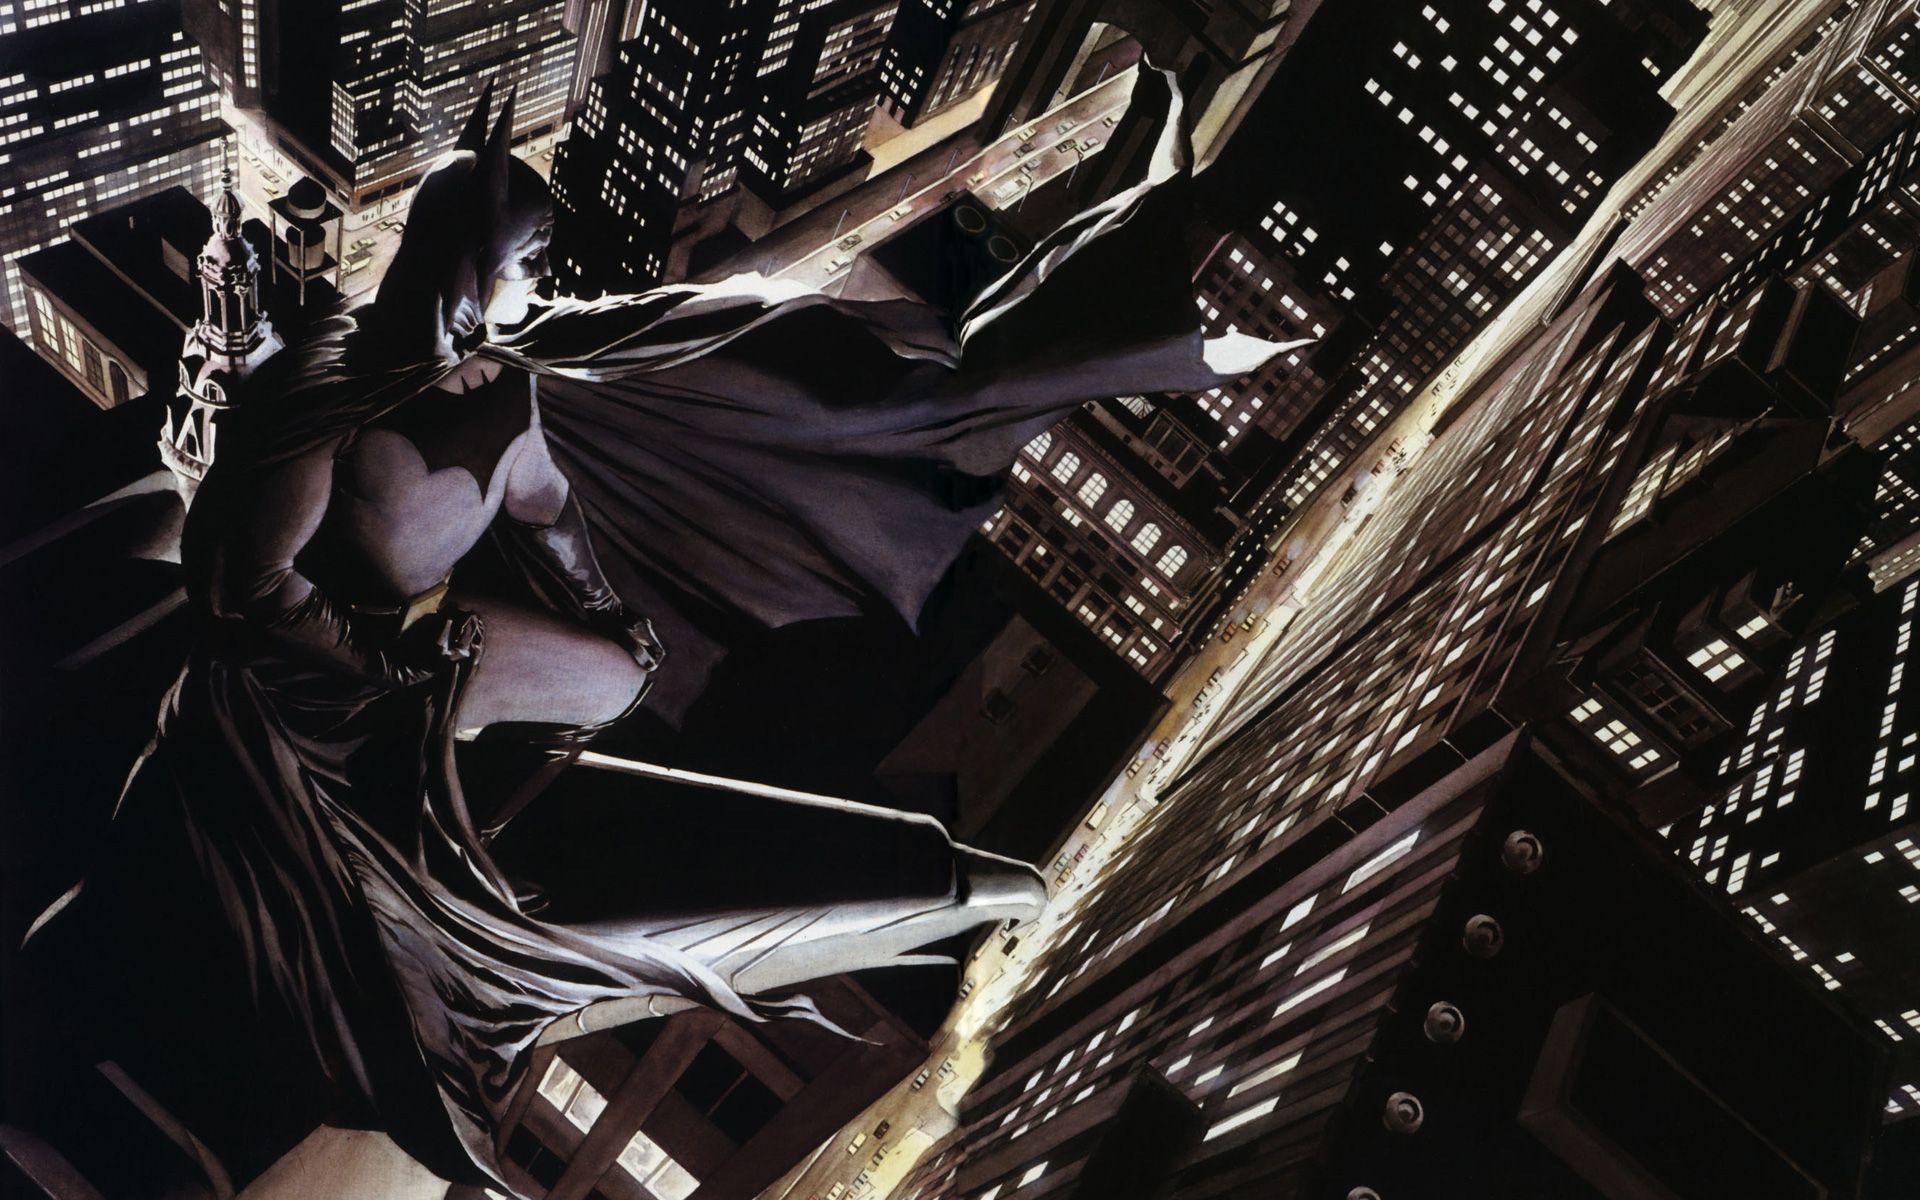 The Dark Knight Rules: Amazing Batman Desktop Wallpaper!. Batman